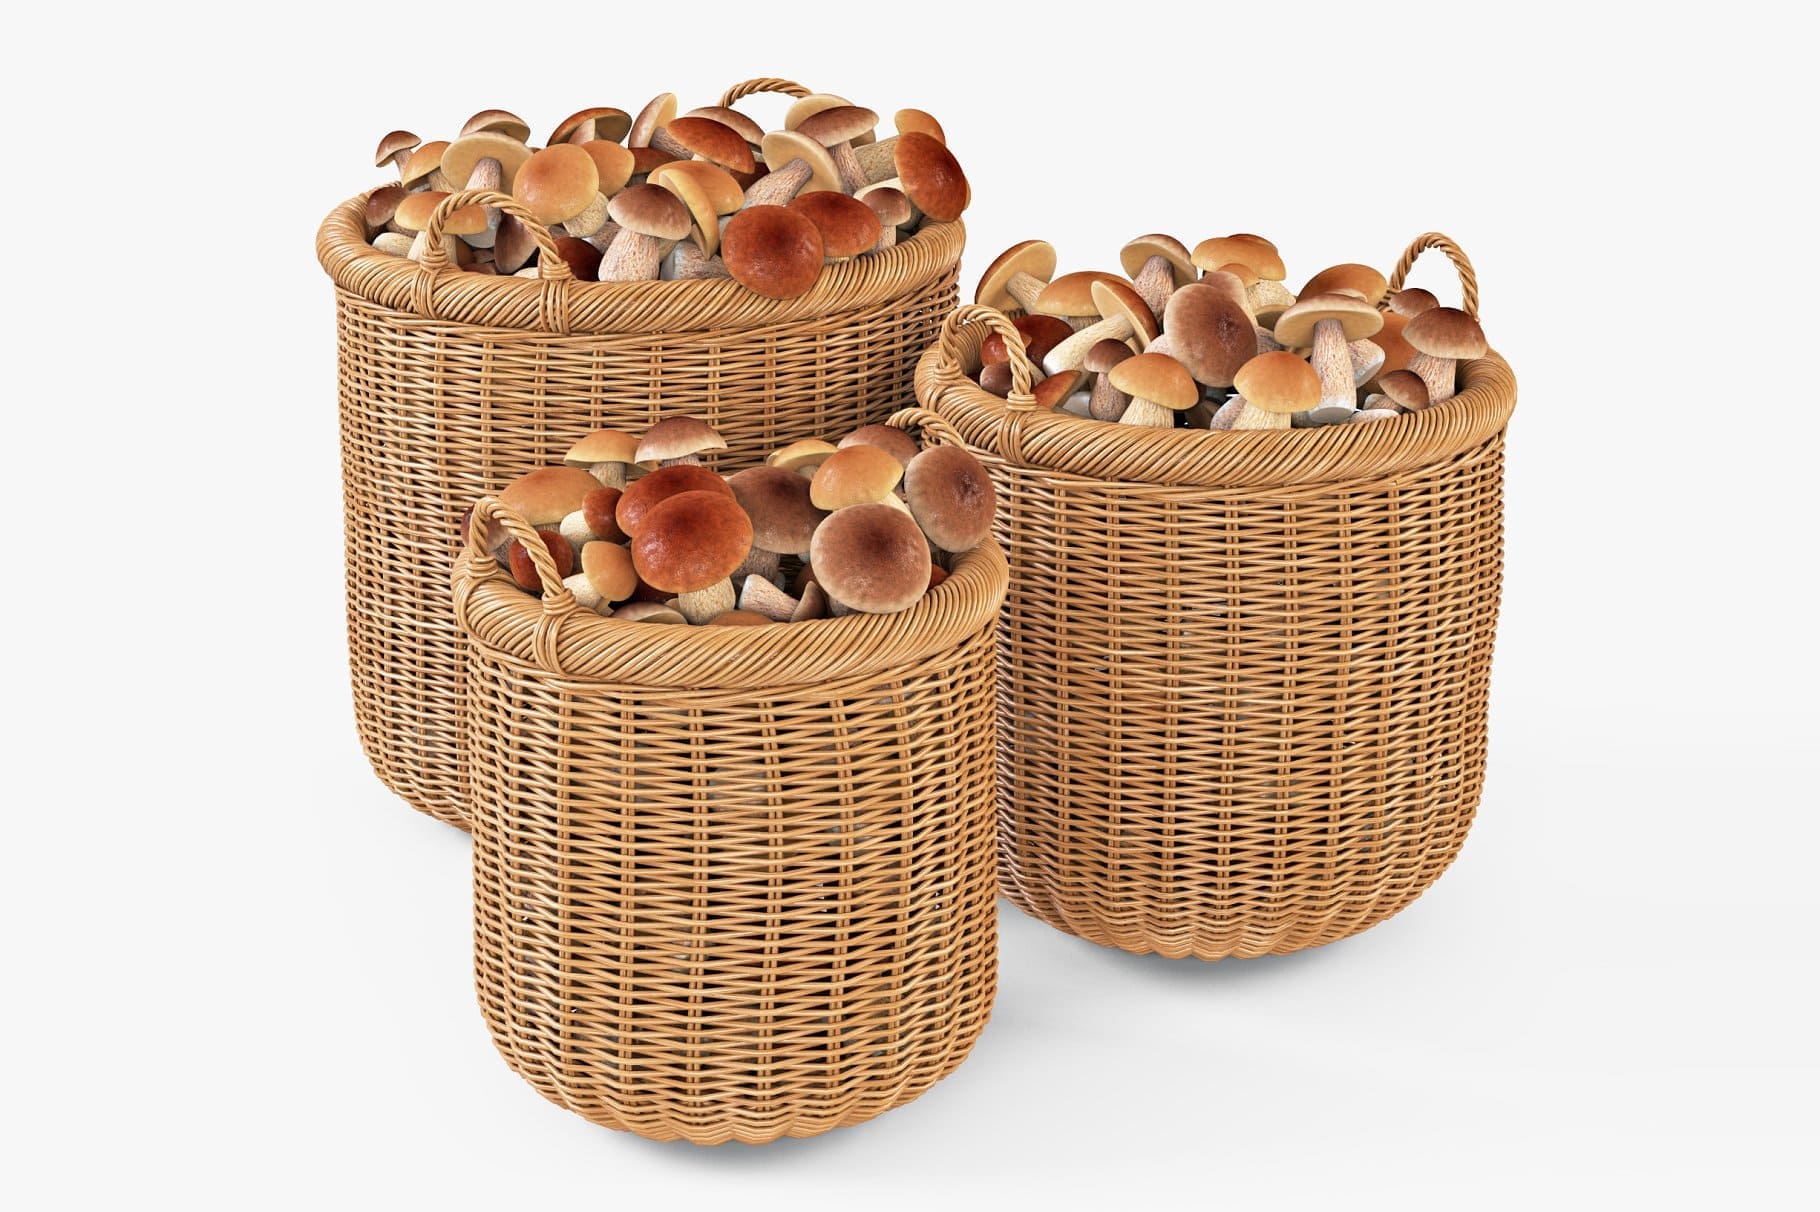 Image of large baskets of mushrooms.